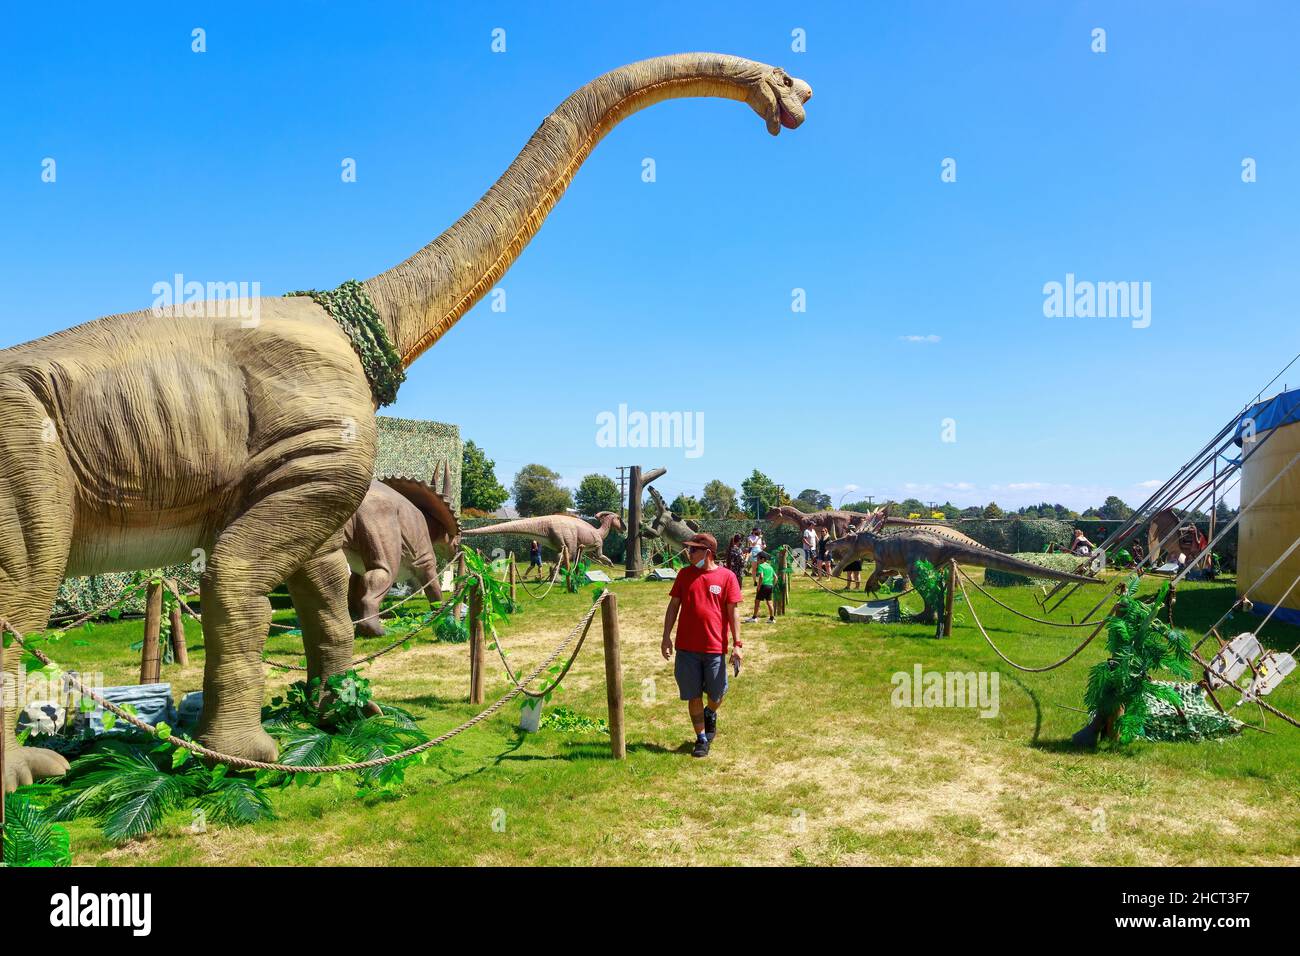 Giant dinosaur models at a traveling show. A man walks past a sculpture of the sauropod Brachiosaurus Stock Photo